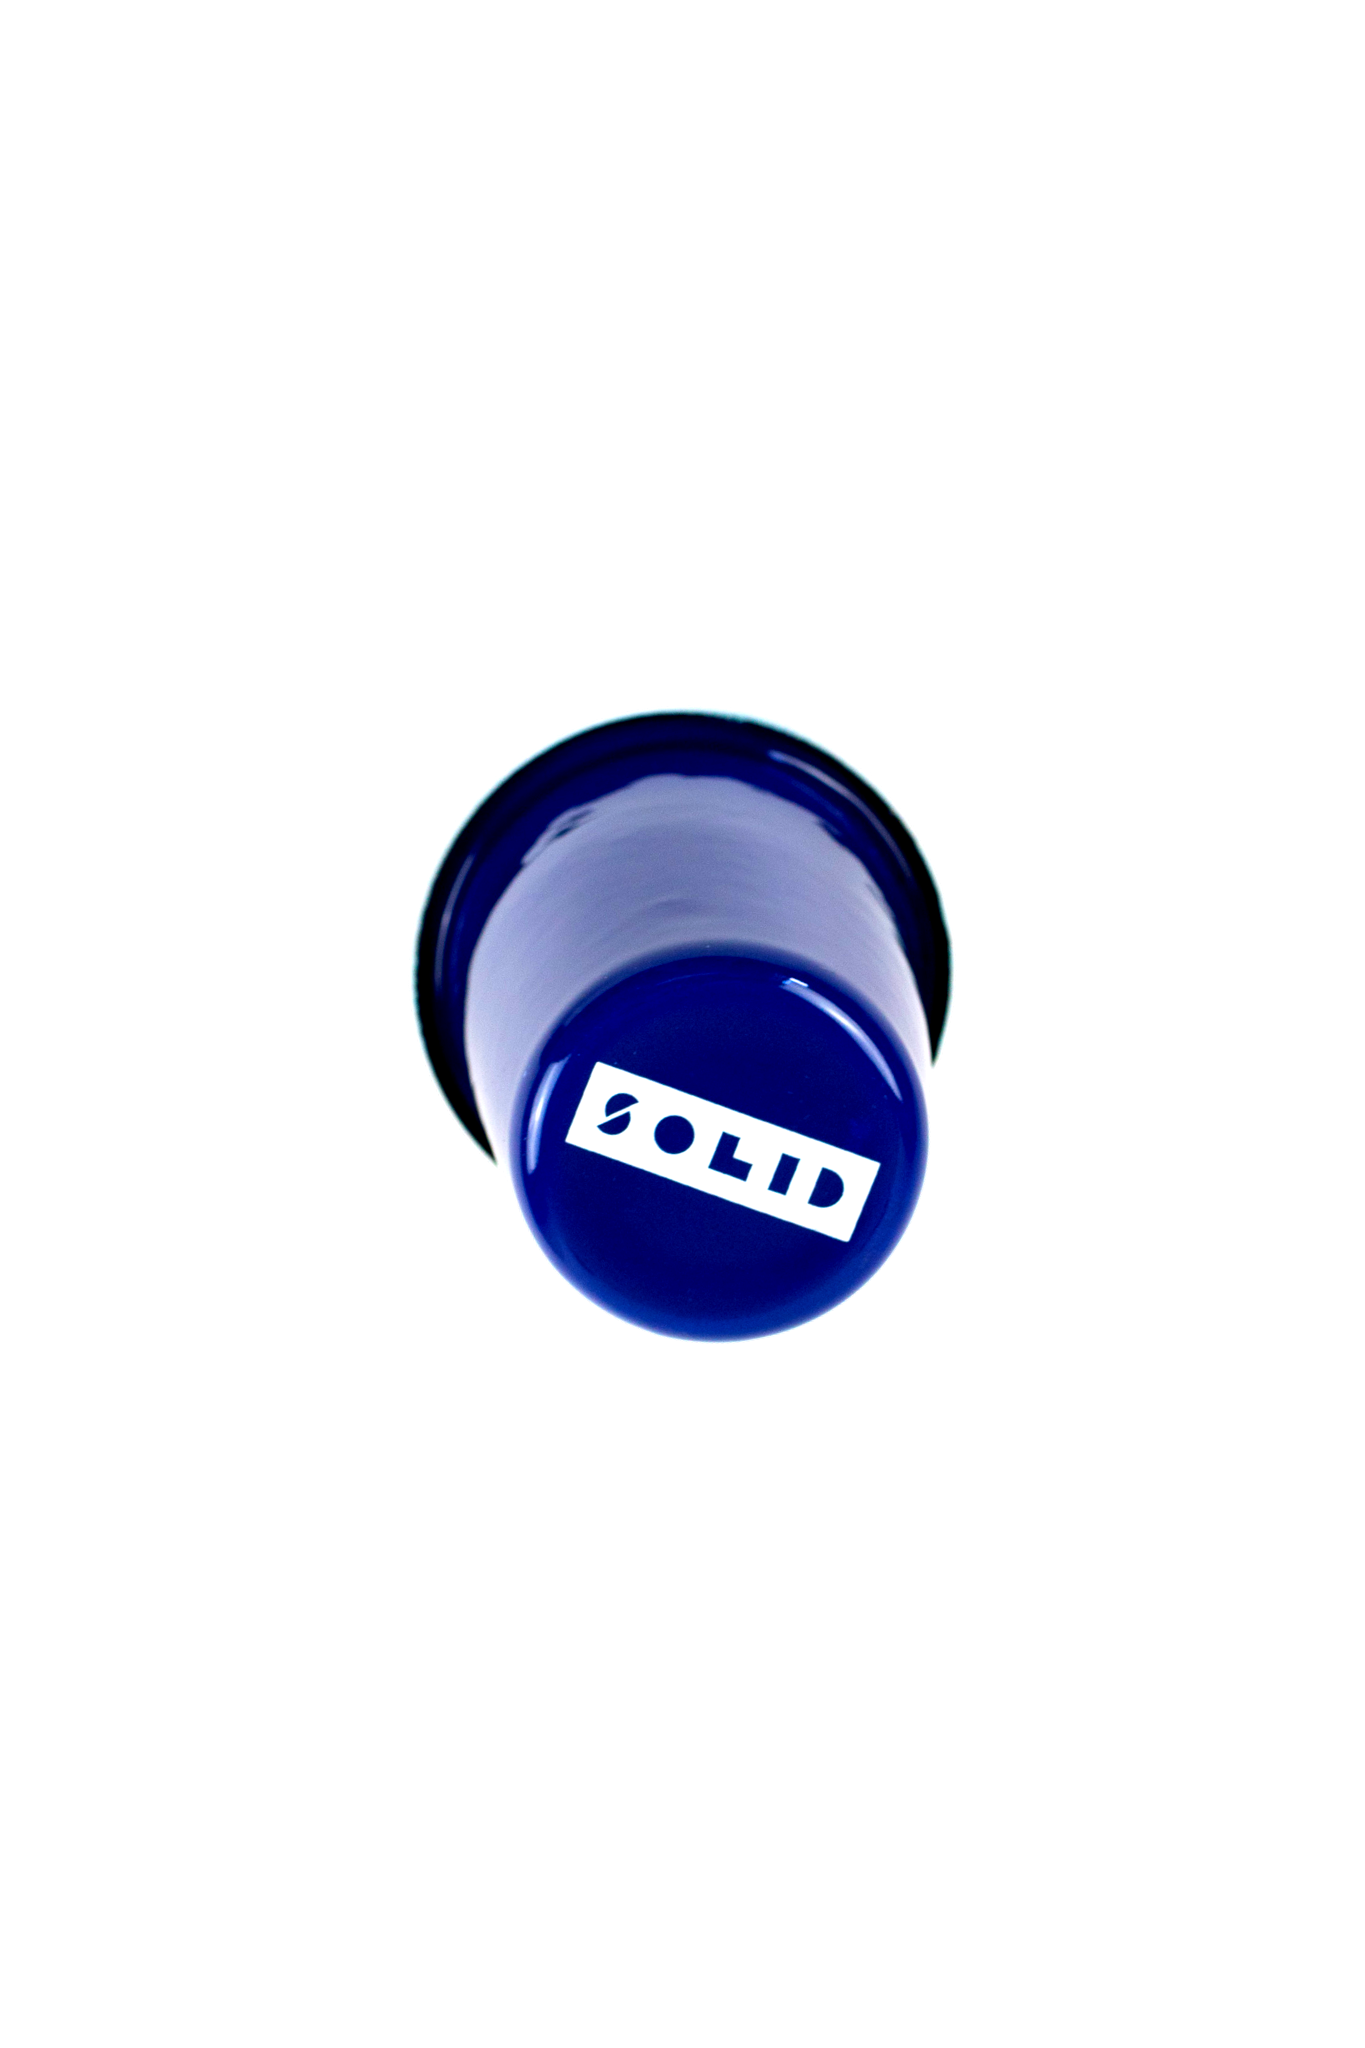 Verre-acier-emaille-logo-SOLID